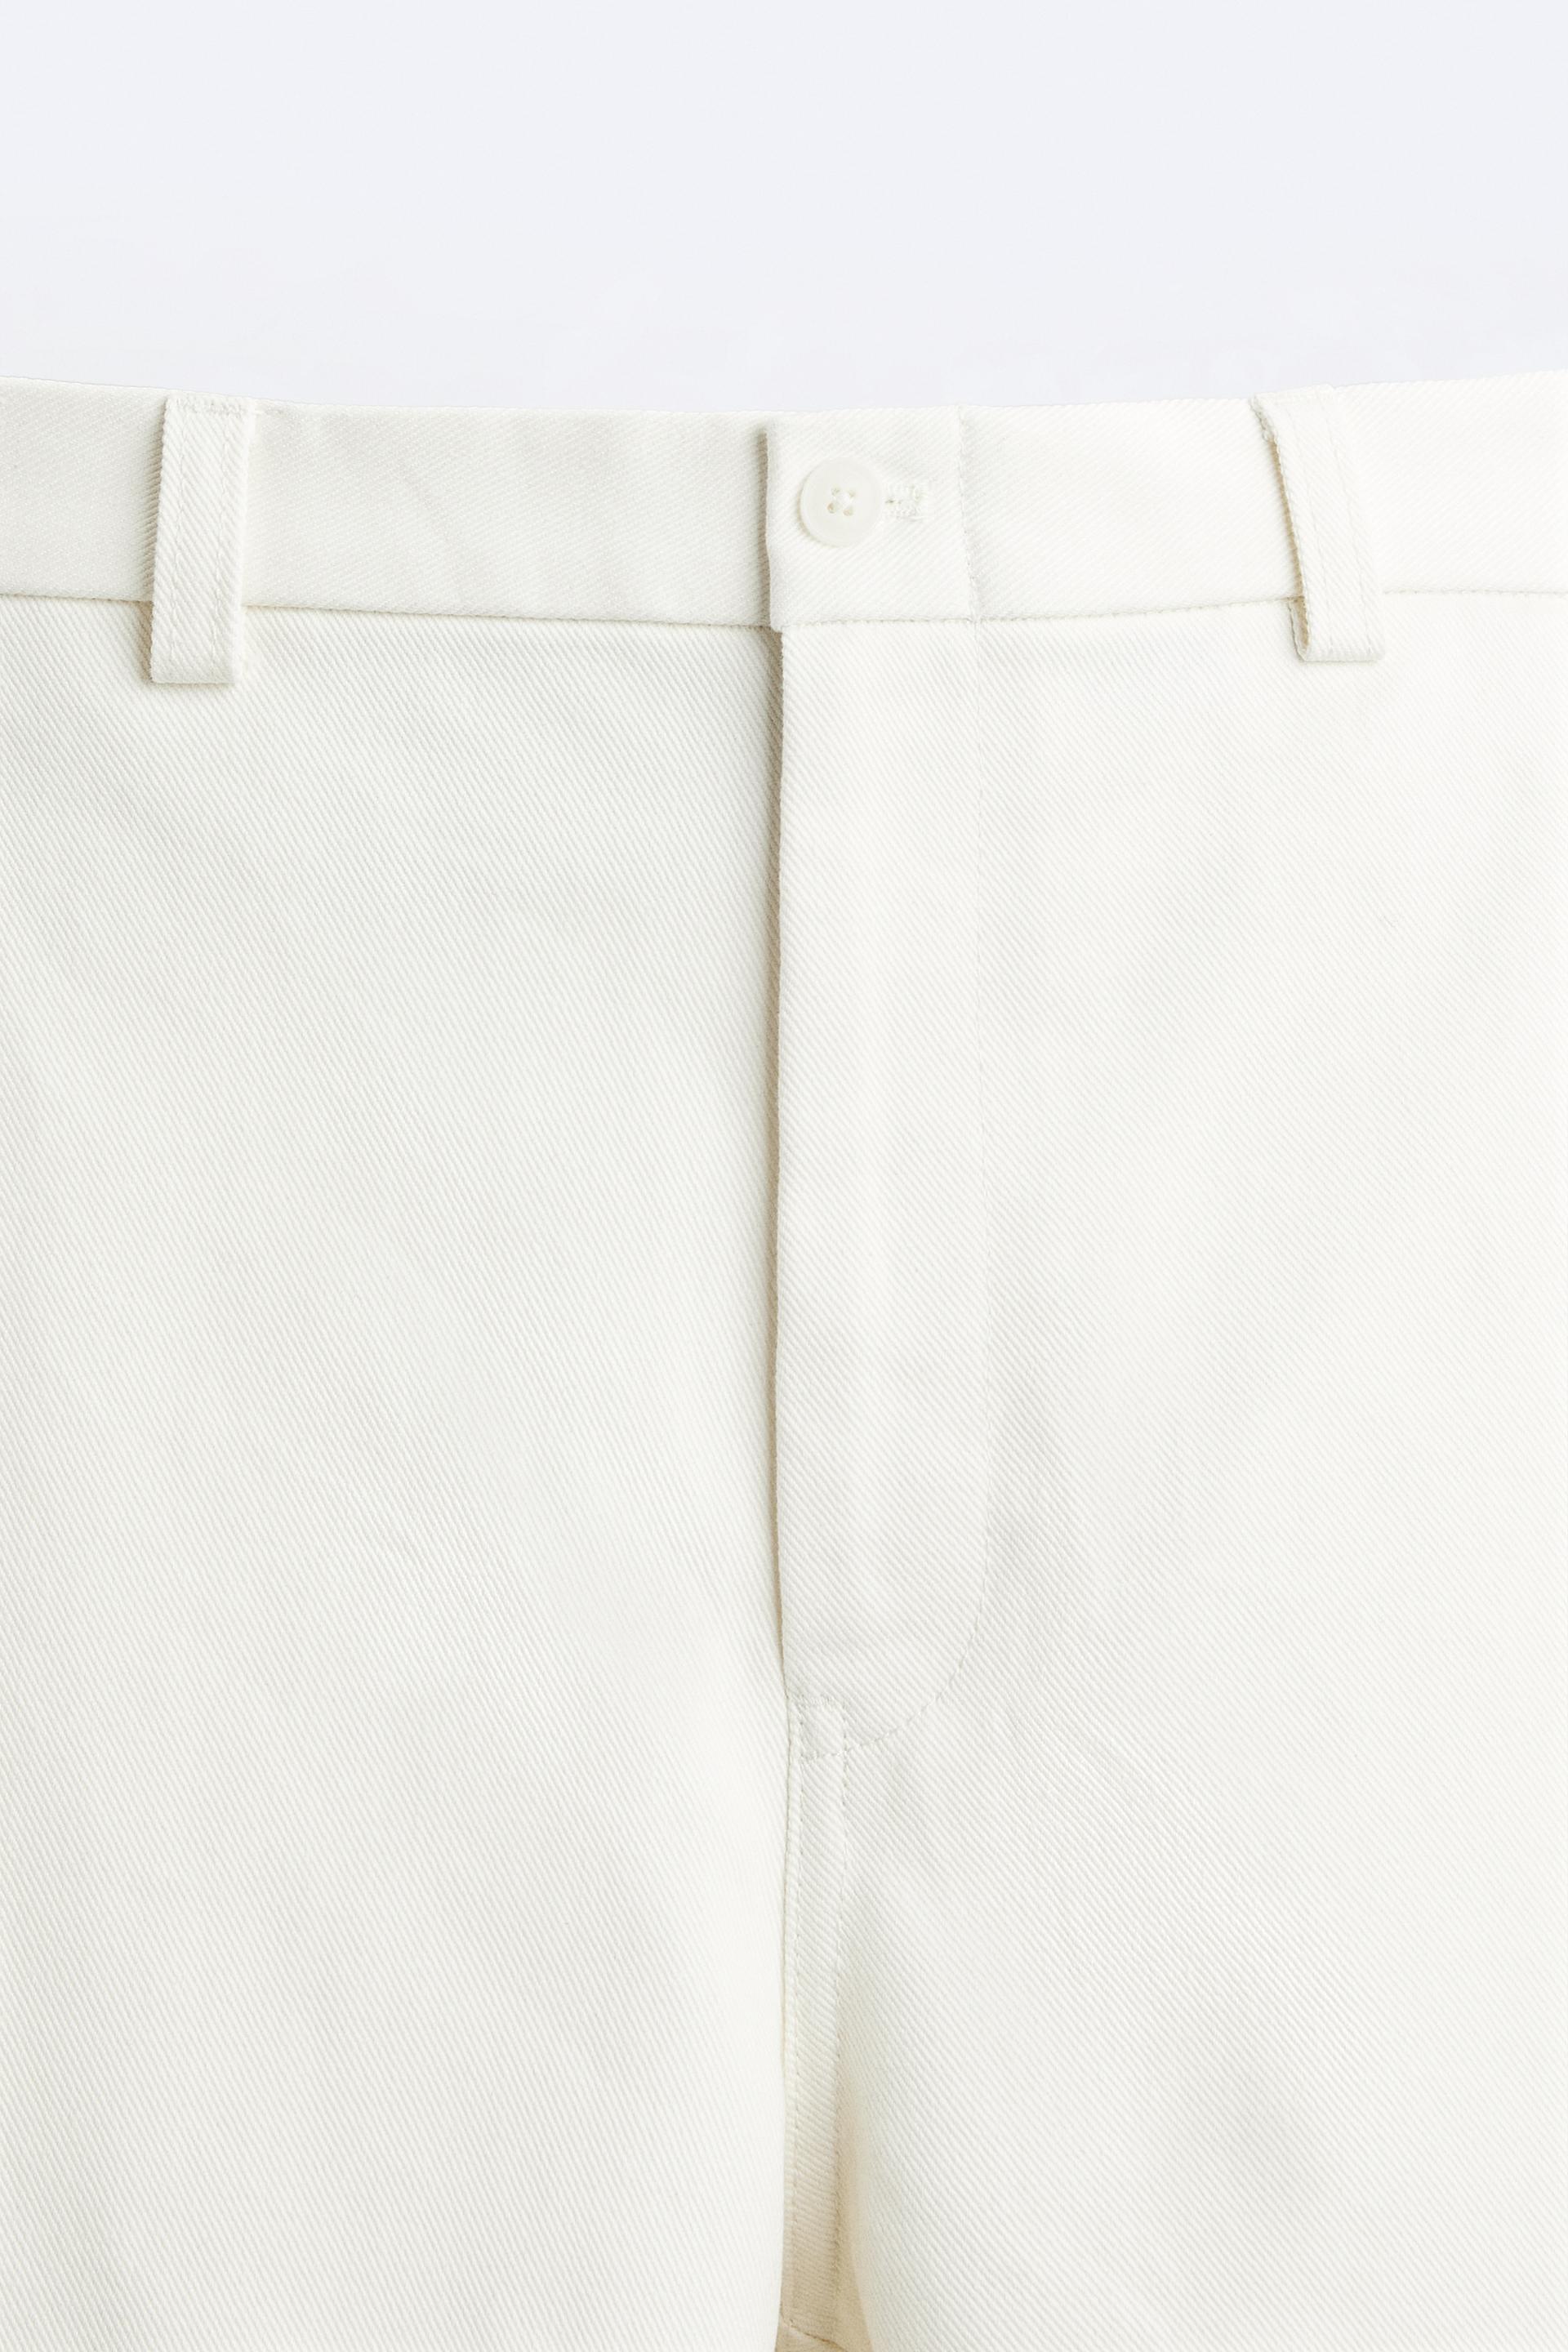 Pantalons ZARA Femme  Pantalon Droit Fendu Blanc Cassé < Arpanet APP